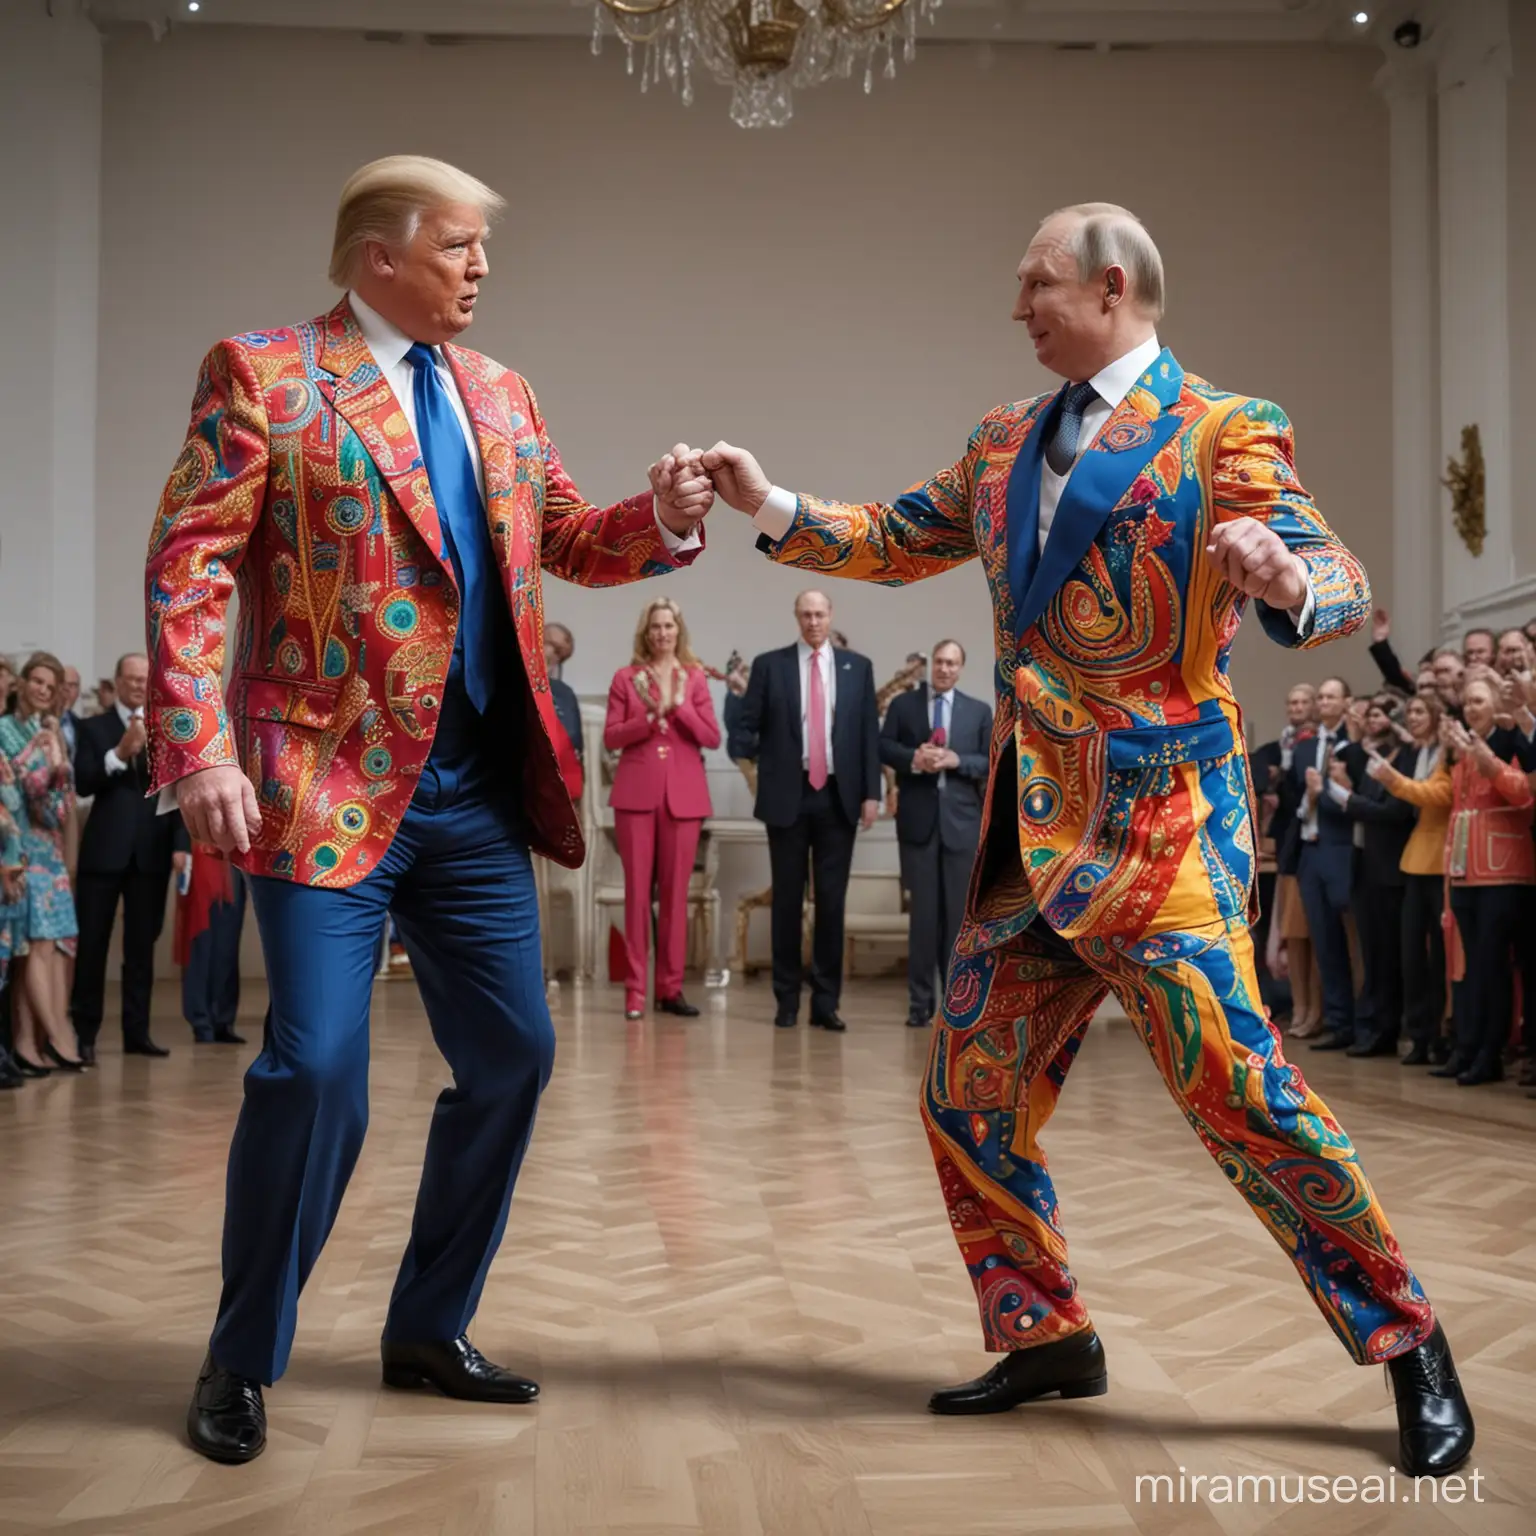 Colorful Trump and Putin Dance Performance